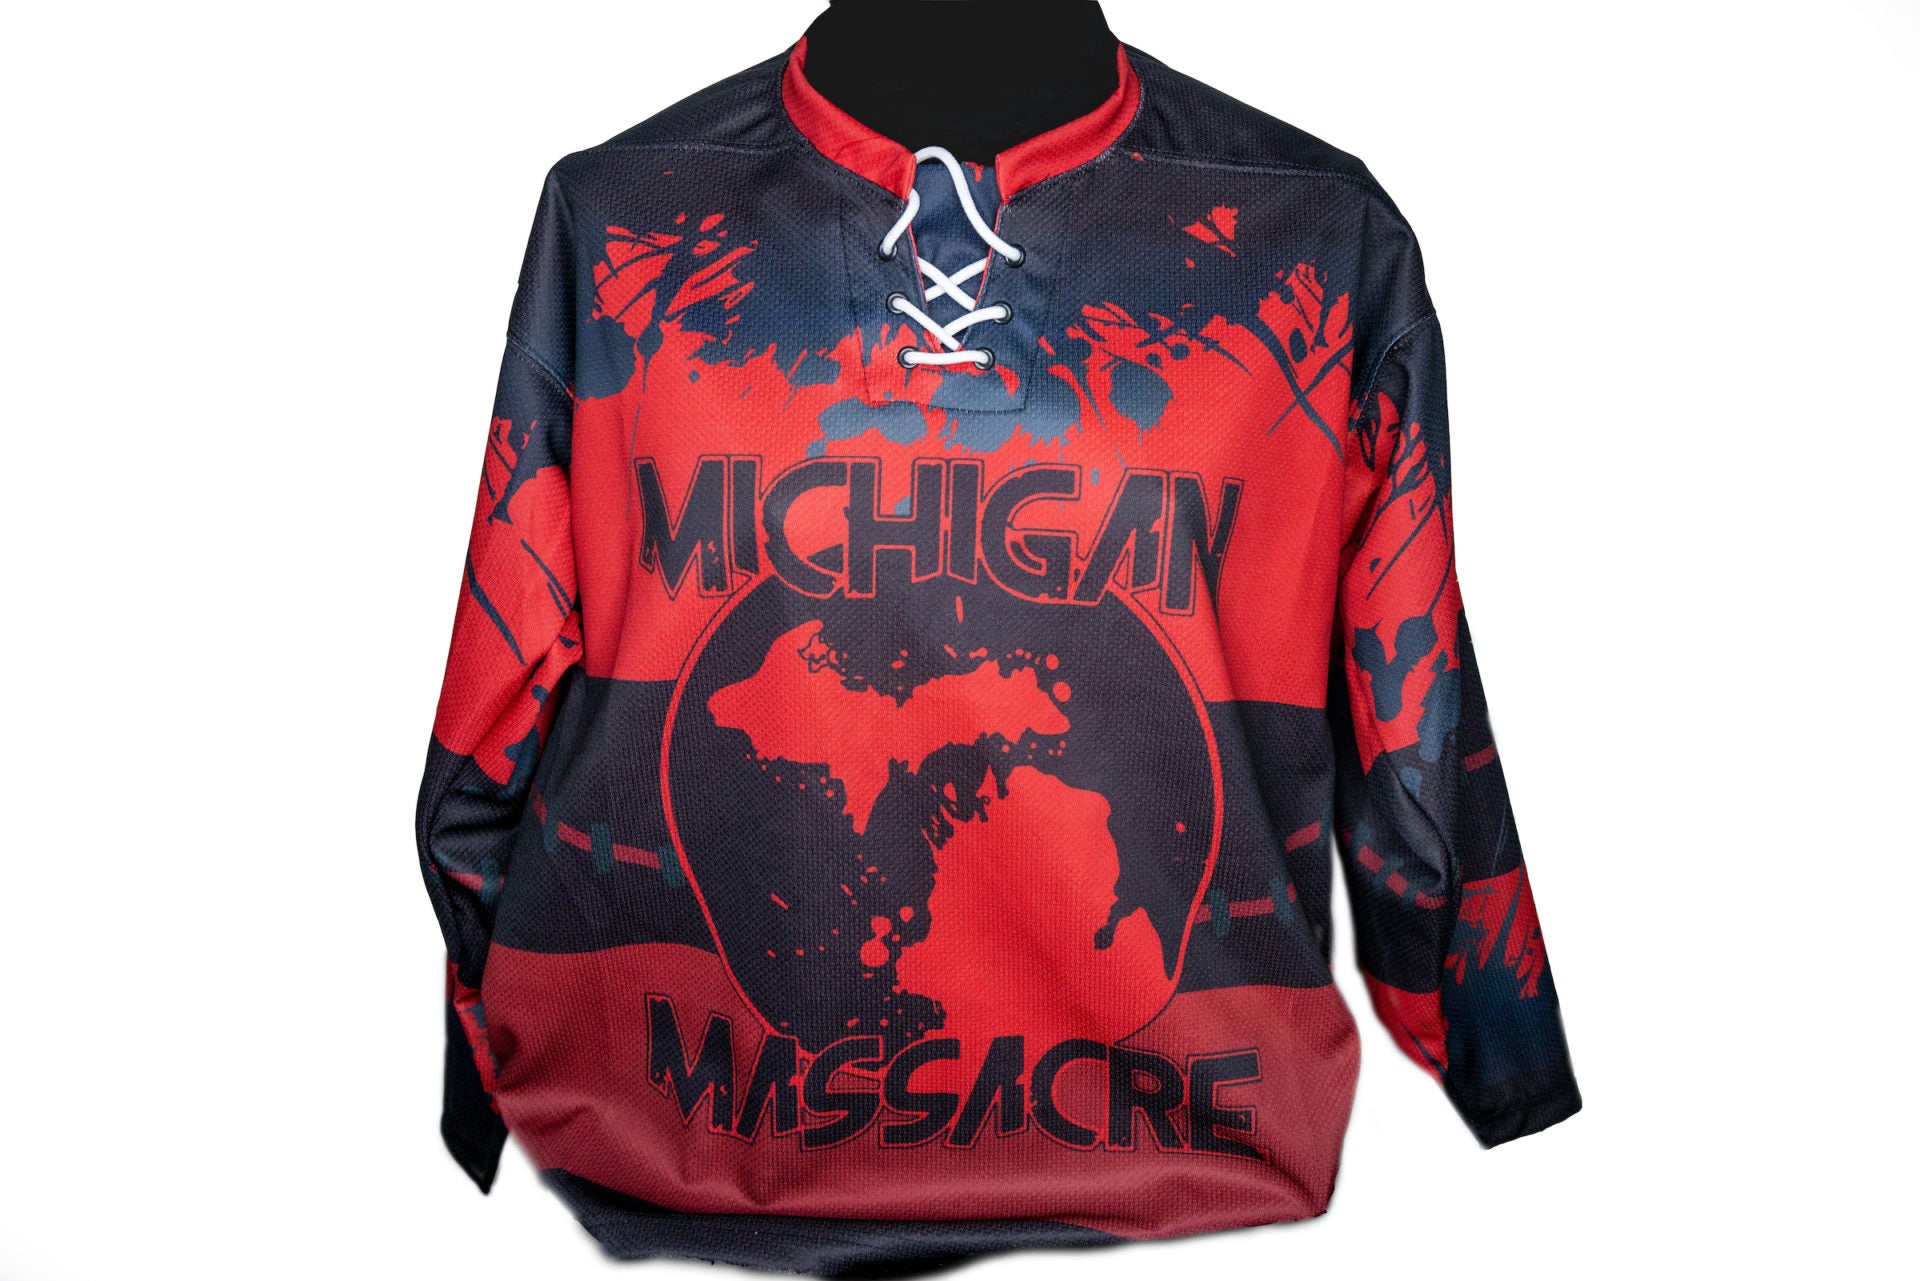 Michigan Massacre - Home Blood Red Jersey (Owner - Mess Bucket Comics)